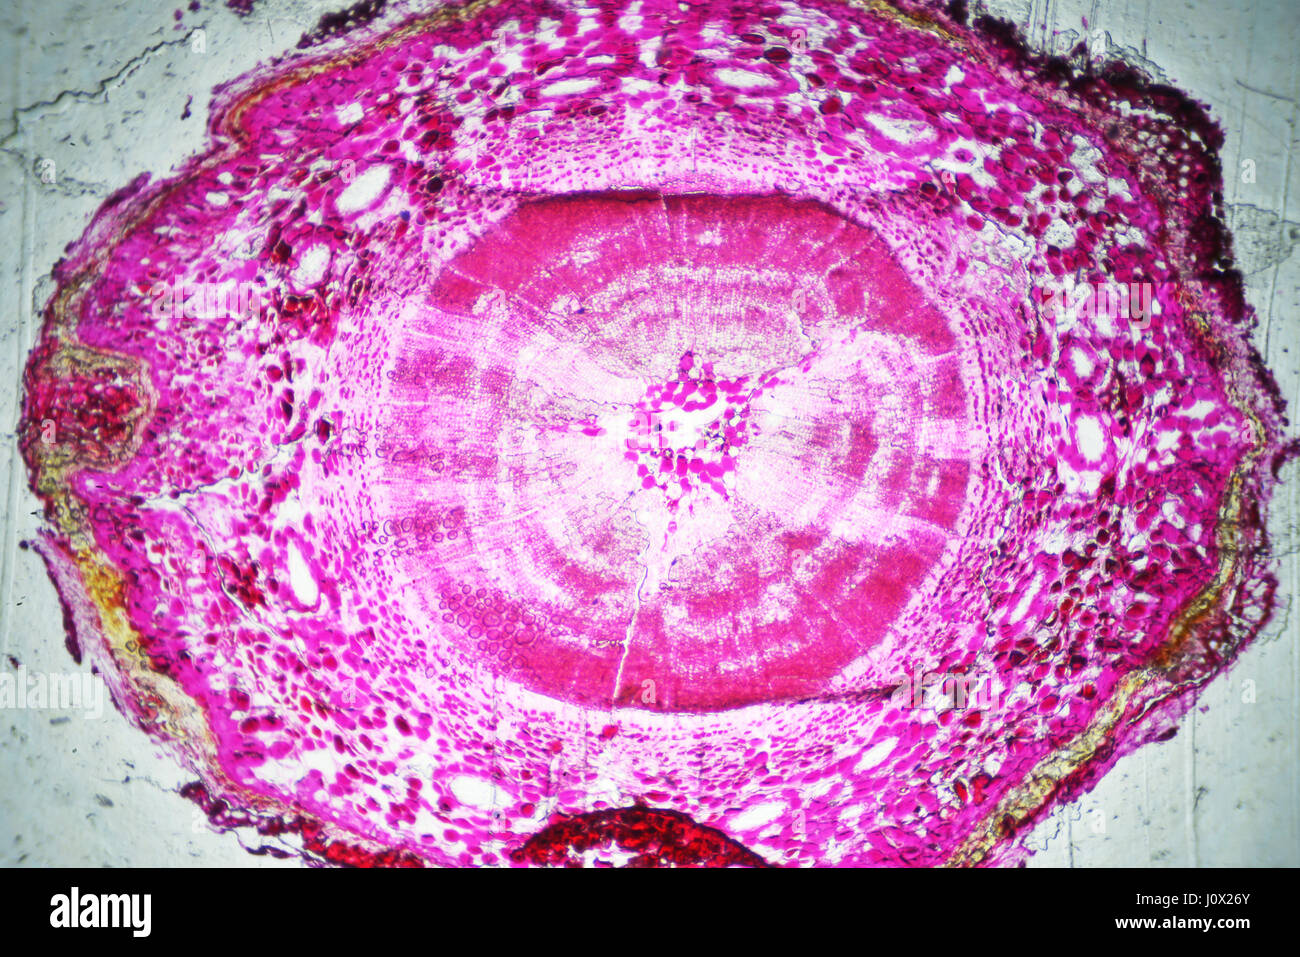 The Microscopic World. Pinetree stem under microscope. Stock Photo